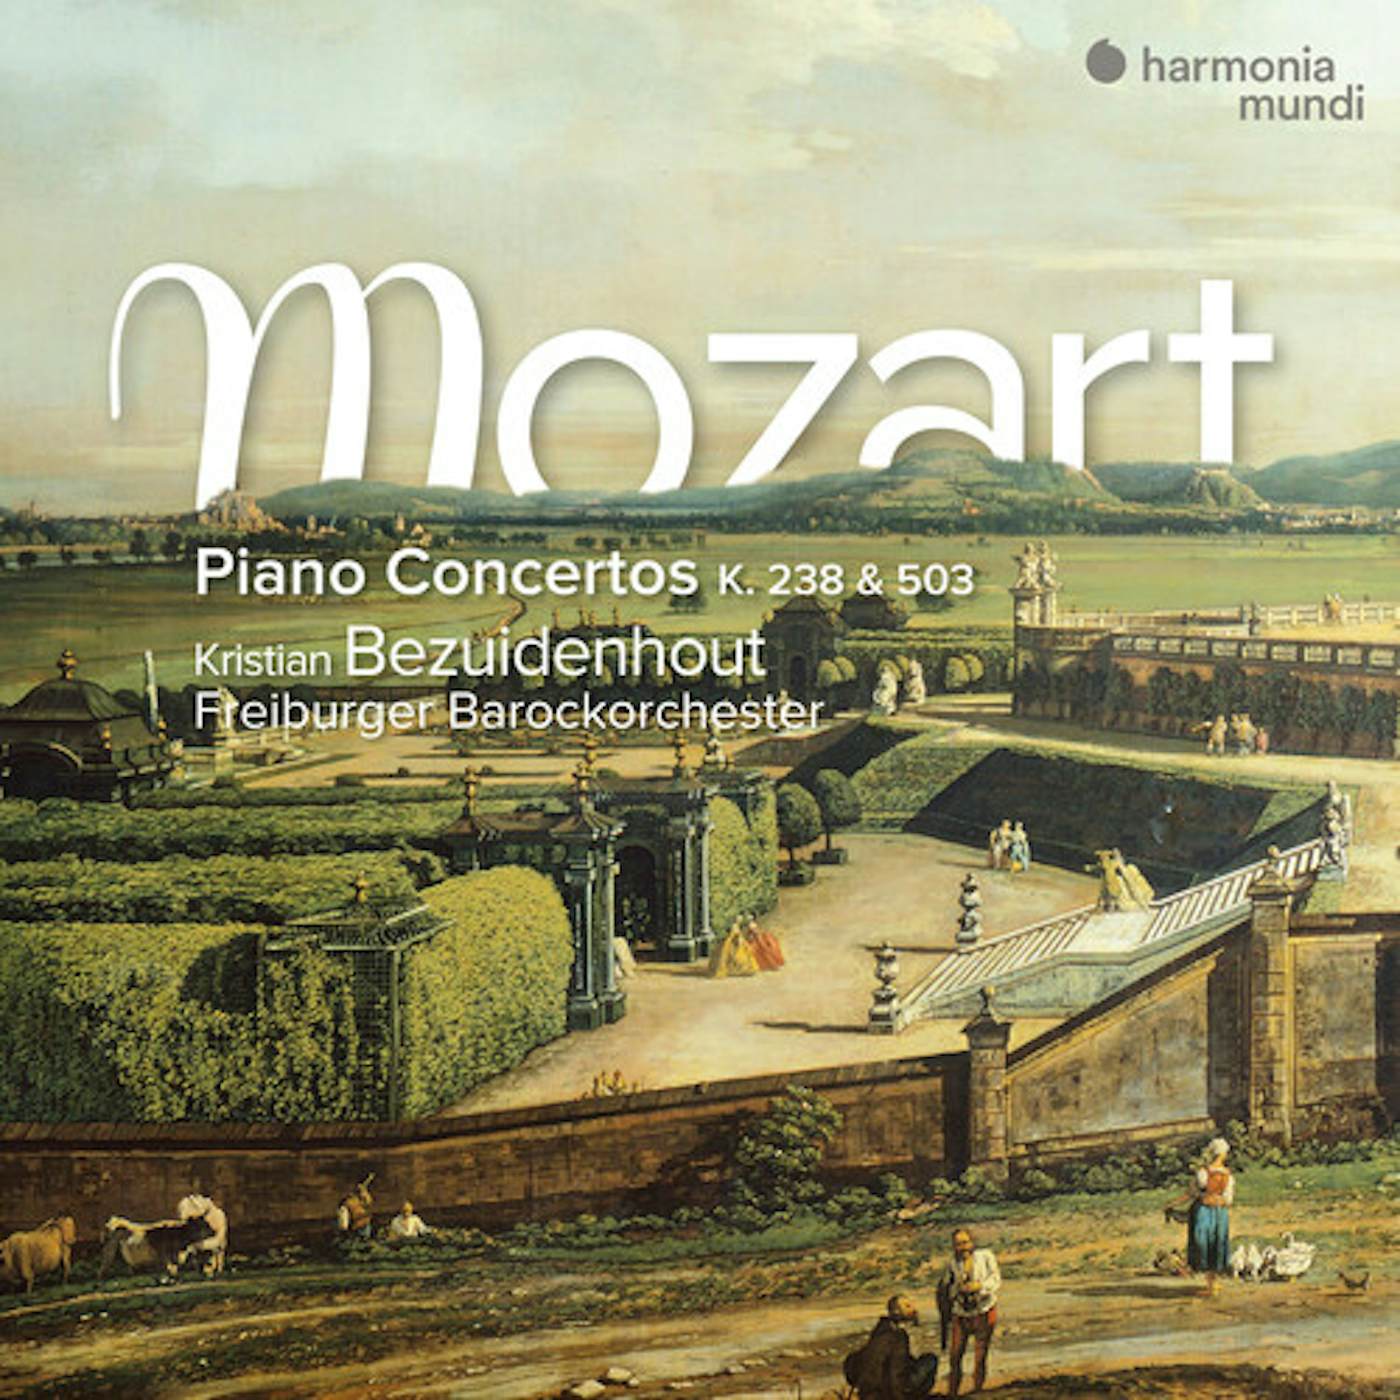 Freiburger Barockorchester MOZART: PIANO CONCERTOS K. 238 & 503 CD